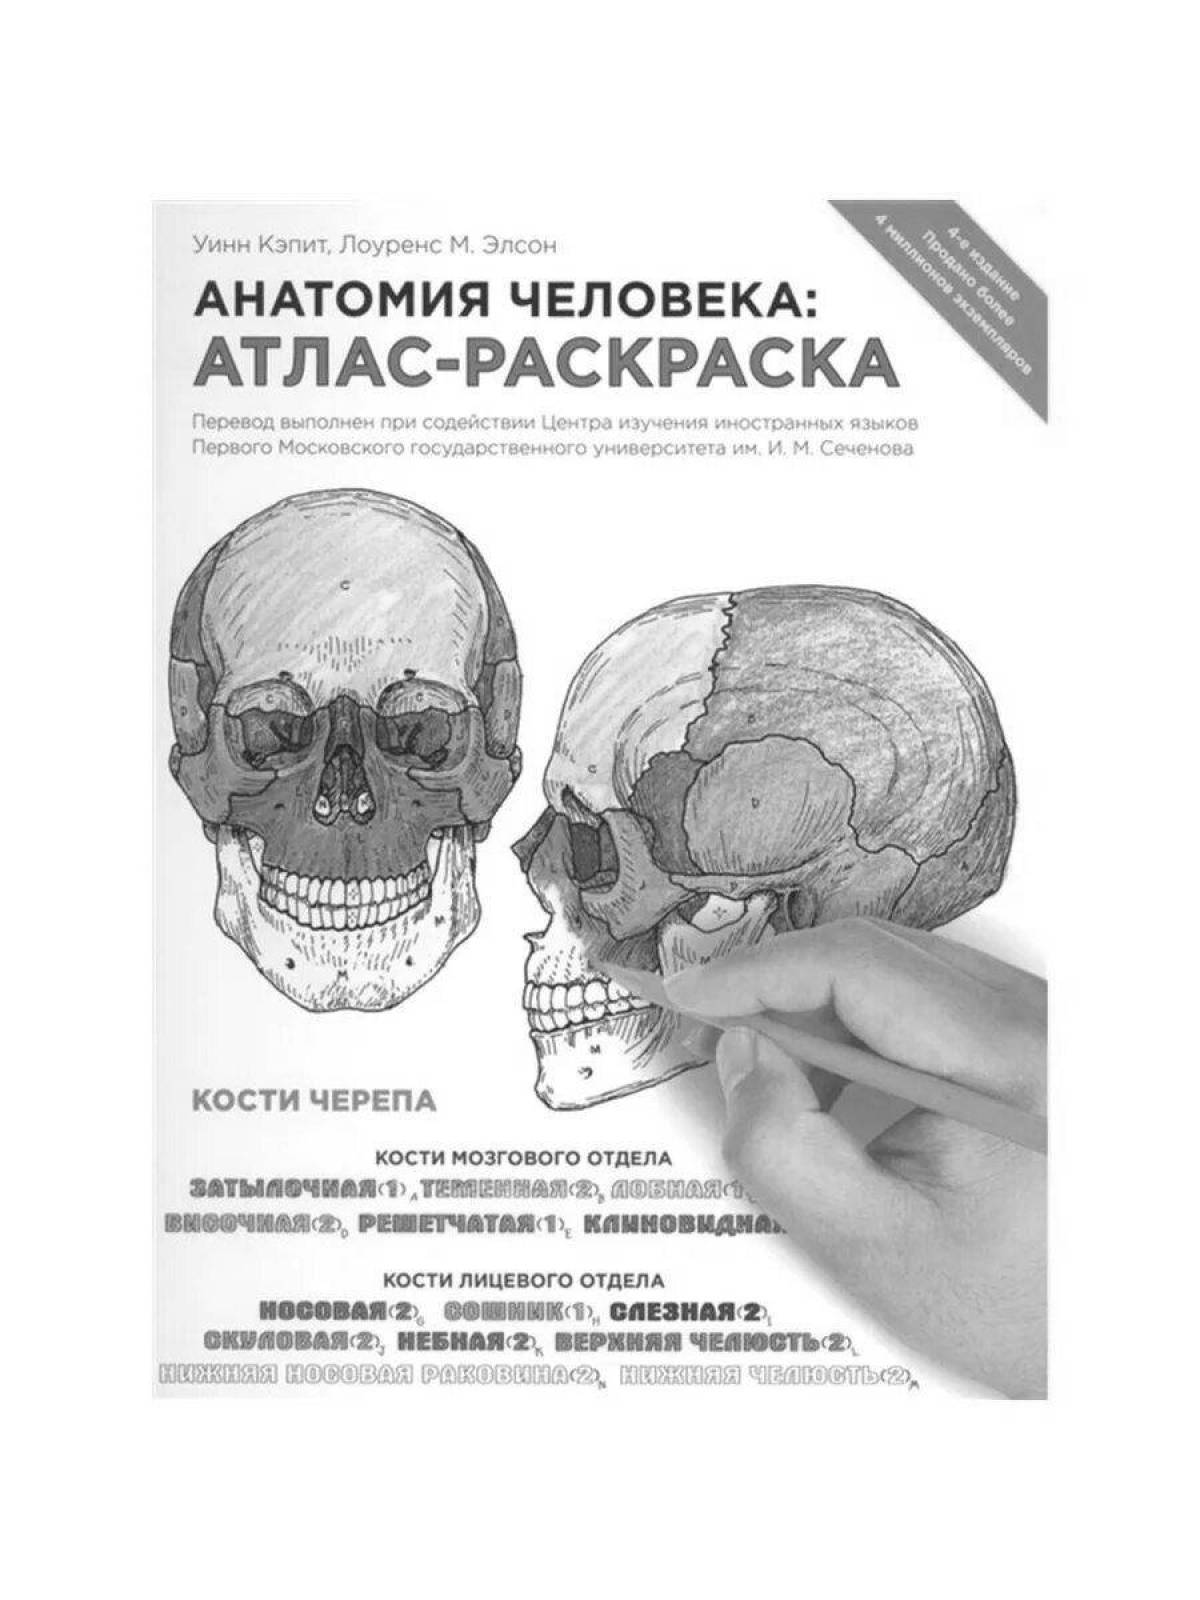 Great coloring anatomy netter atlas